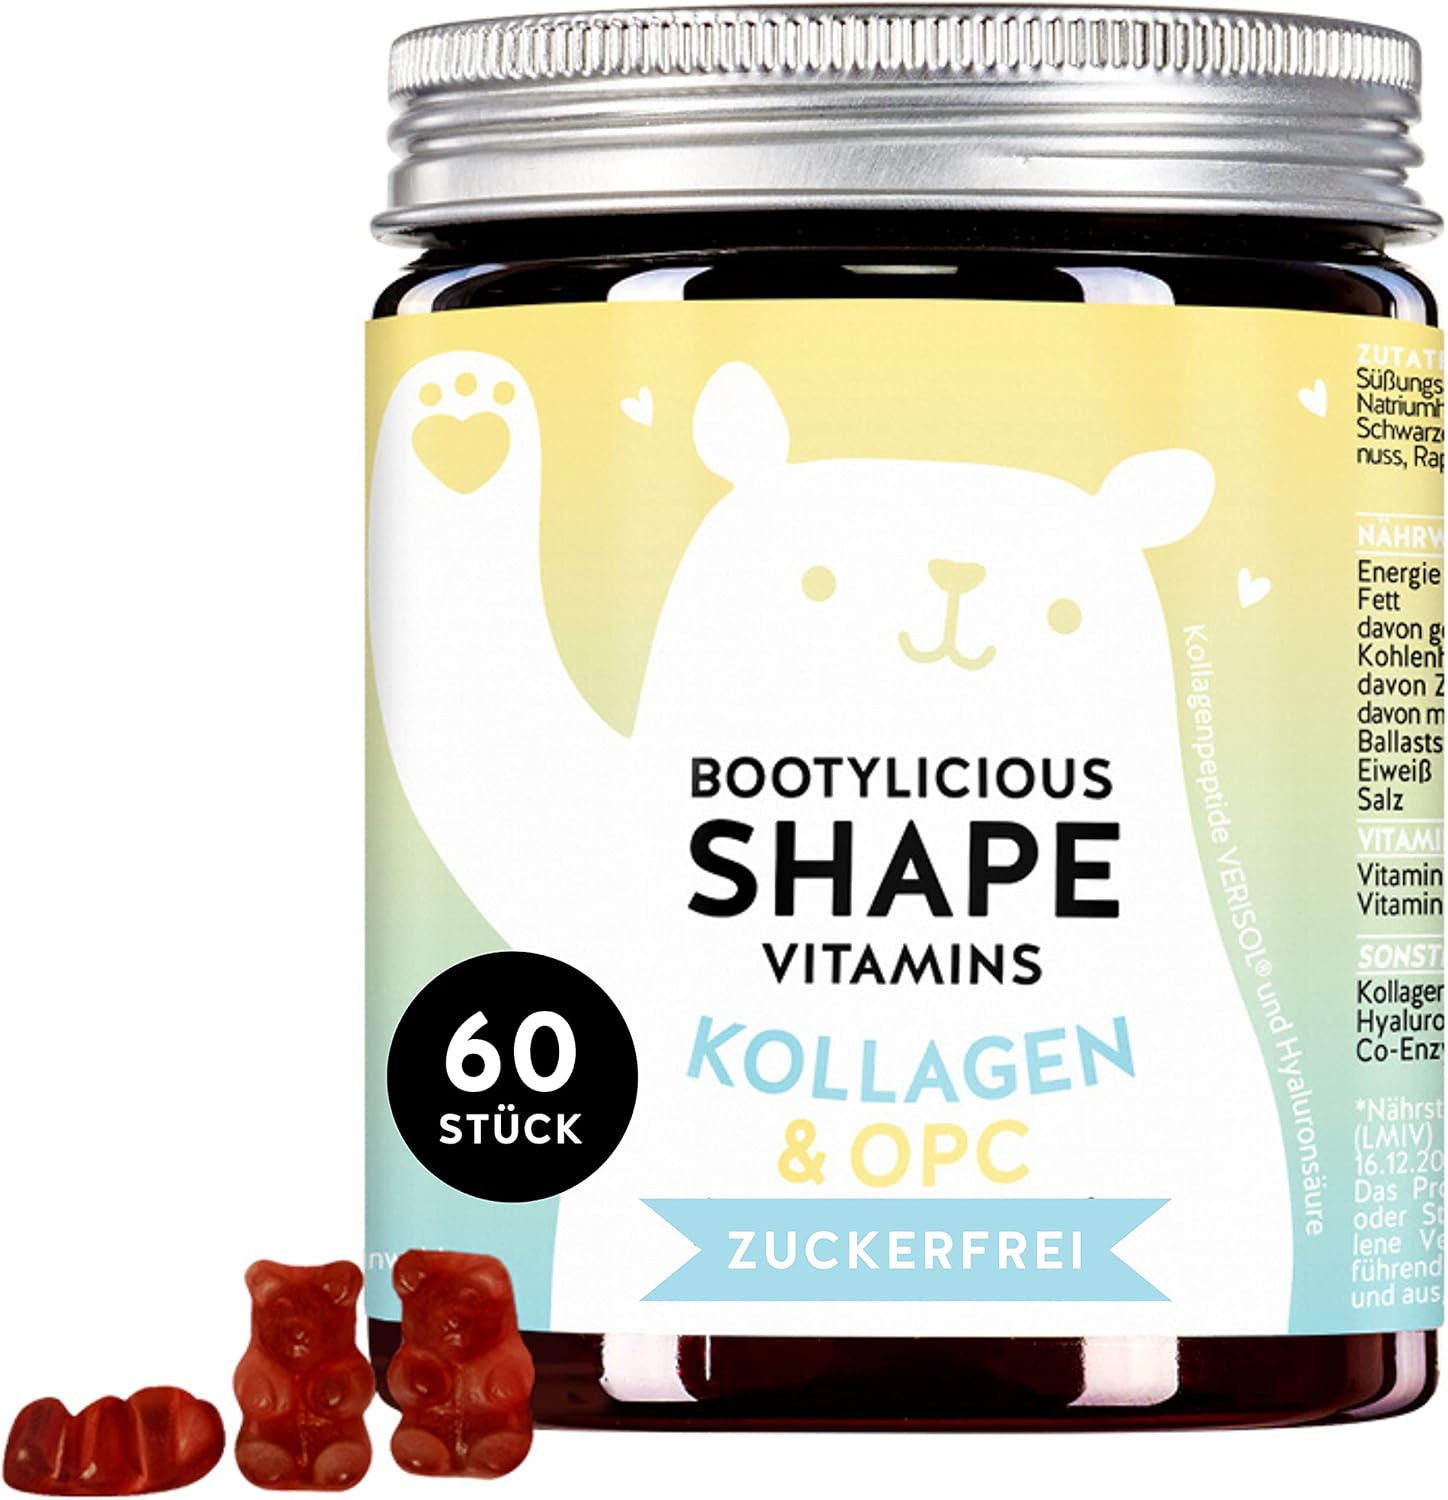 Bears with Benefits Bootylicious Shape | Kollagen & OPC & Vitamin C | 60 Stück